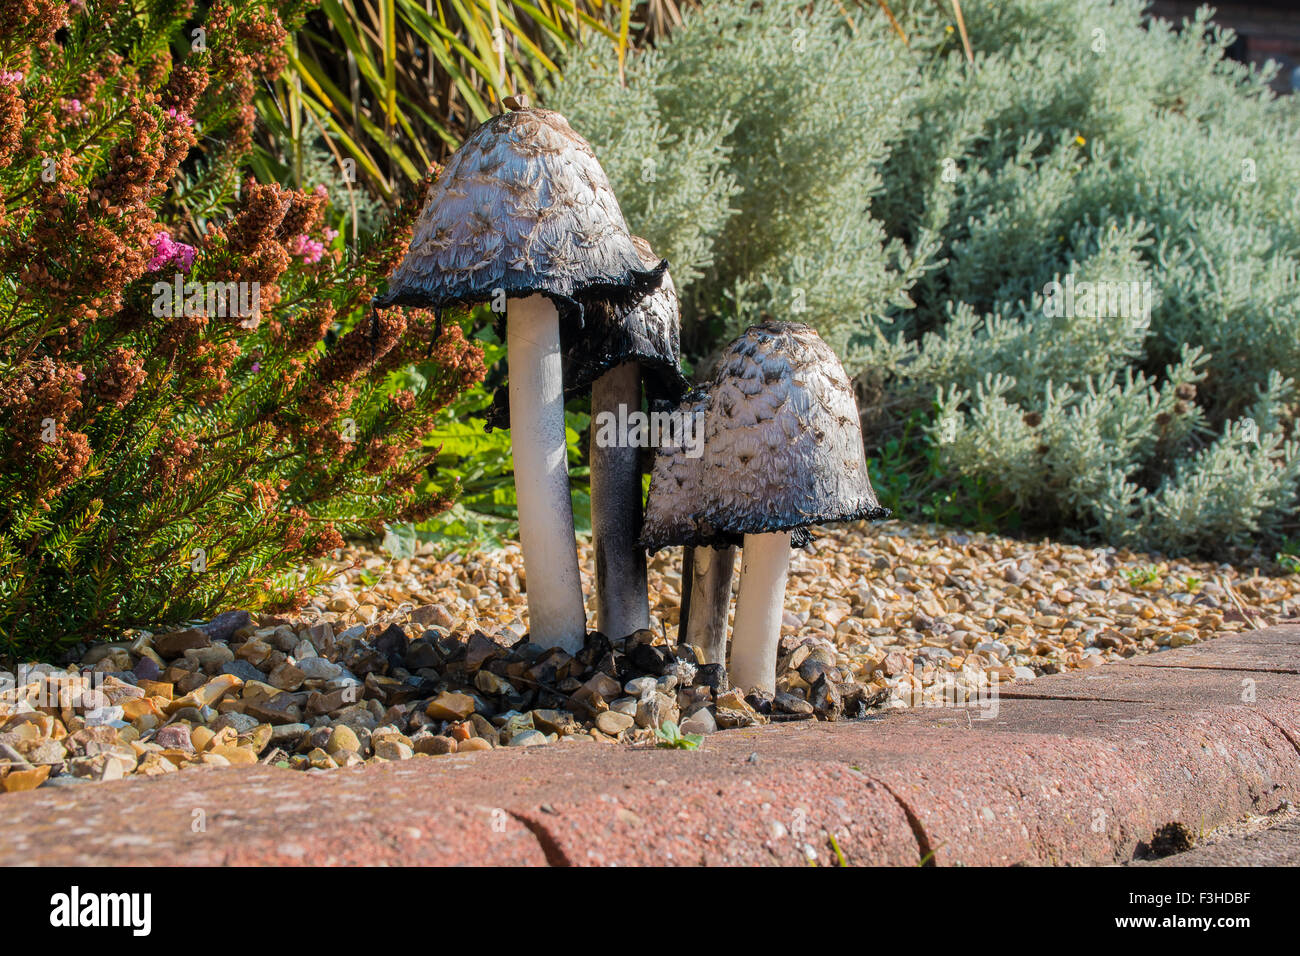 shaggy Ink Caps Mushrooms growing in a Garden Stock Photo